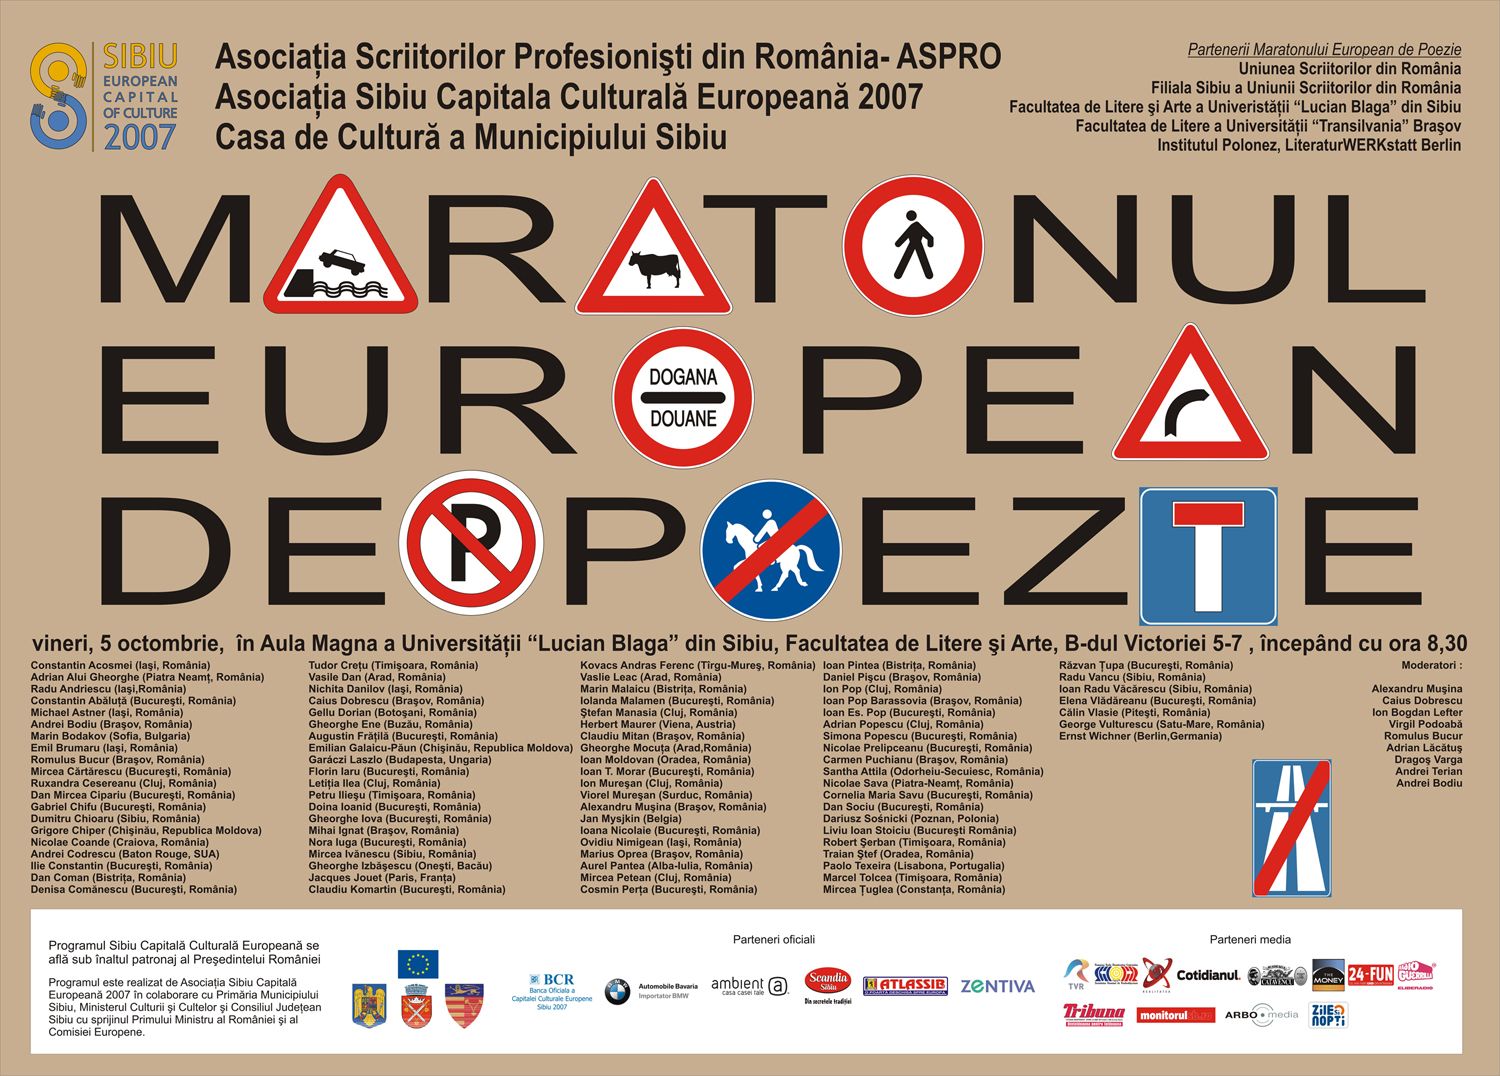 Maratonul European de Poezie